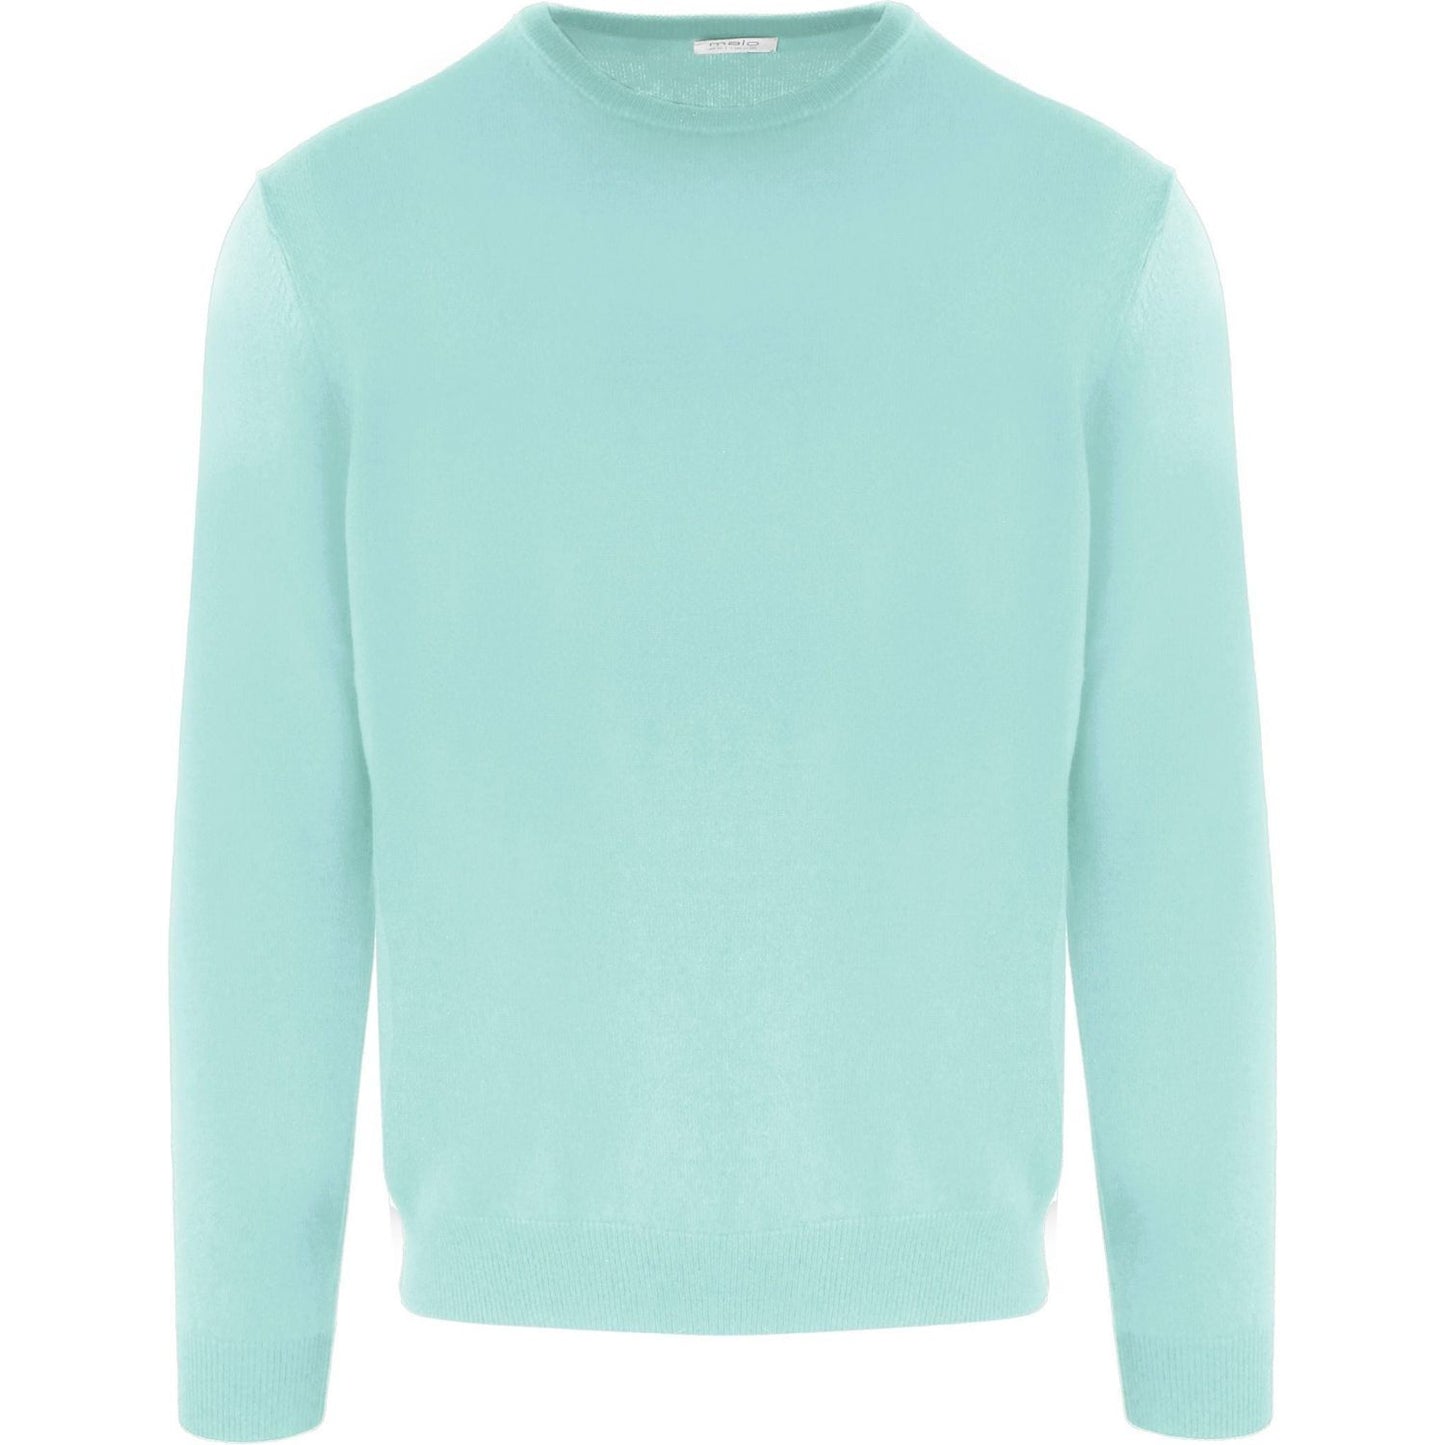 Malo Sumptuous Cashmere Green Roundneck Sweater green-cashmere-sweater-3 MAN SWEATERS product-7480-1601287388-1-scaled-a5a198a0-a11.jpg